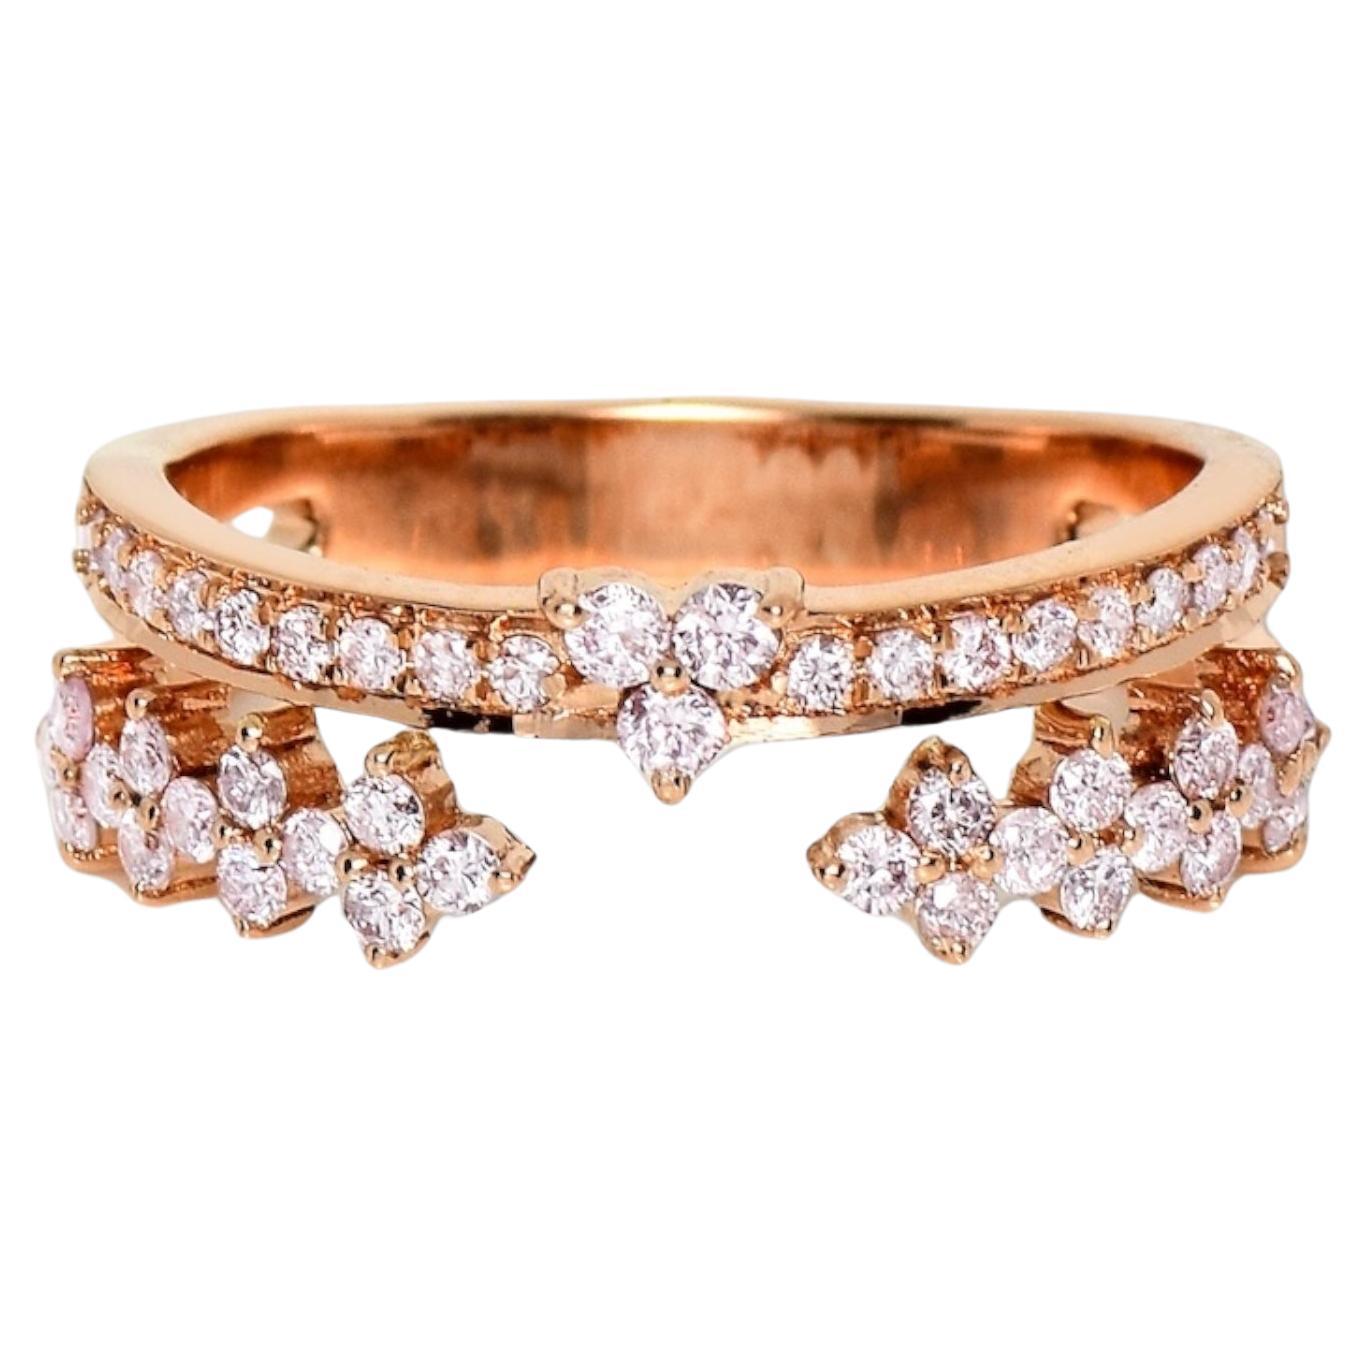 IGI 14K 0.51 ct Natural Pink Diamonds Vintage Crown Design Engagement Ring